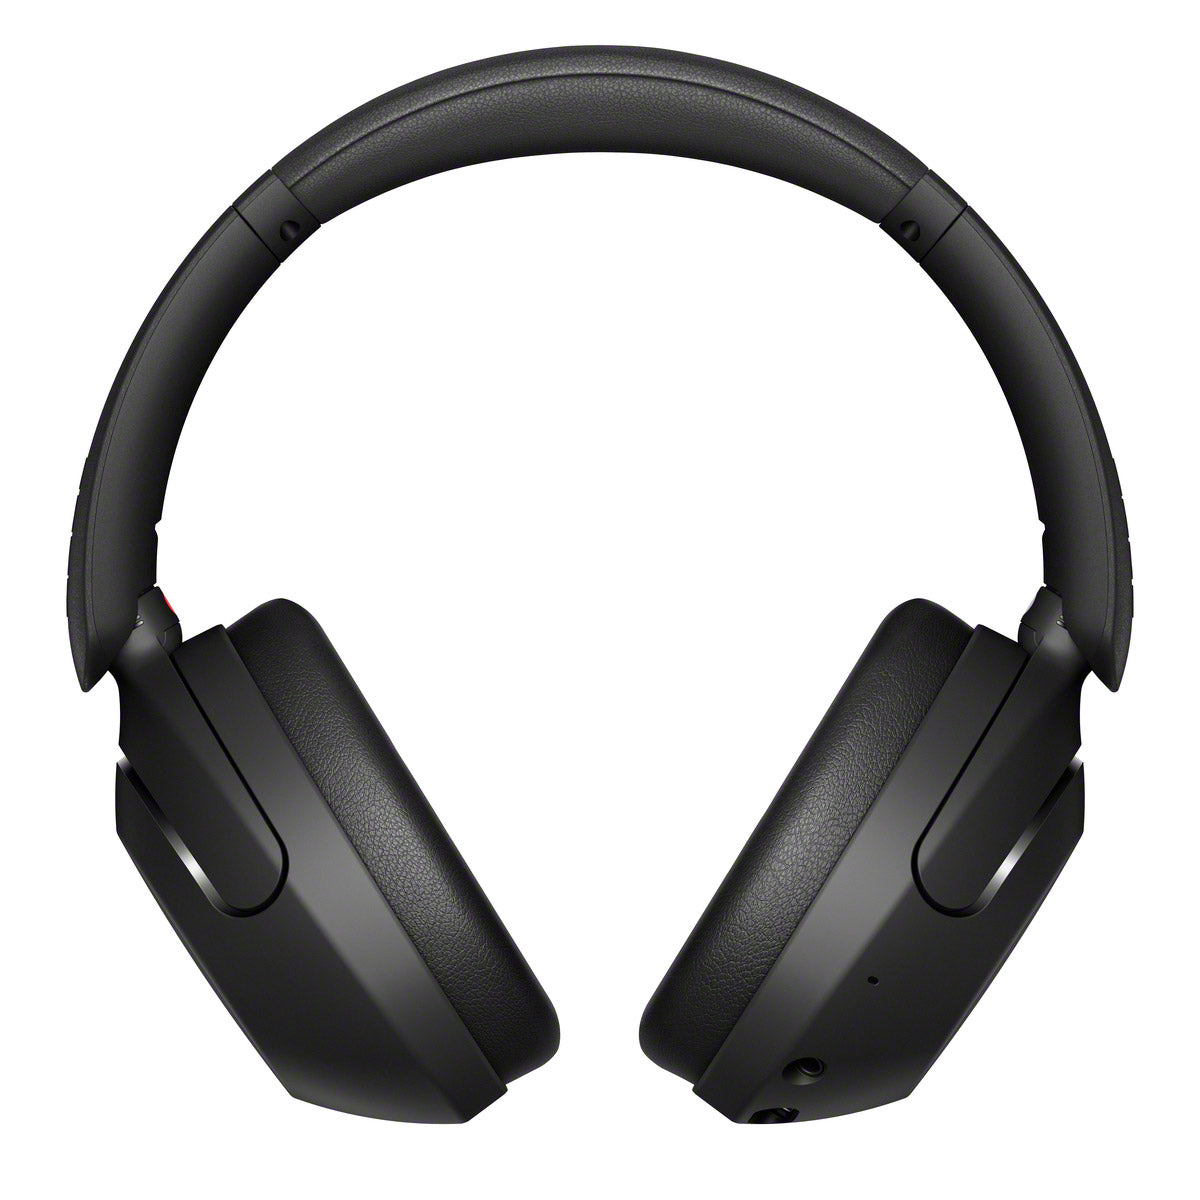 WH-XB910N Wireless Headphones